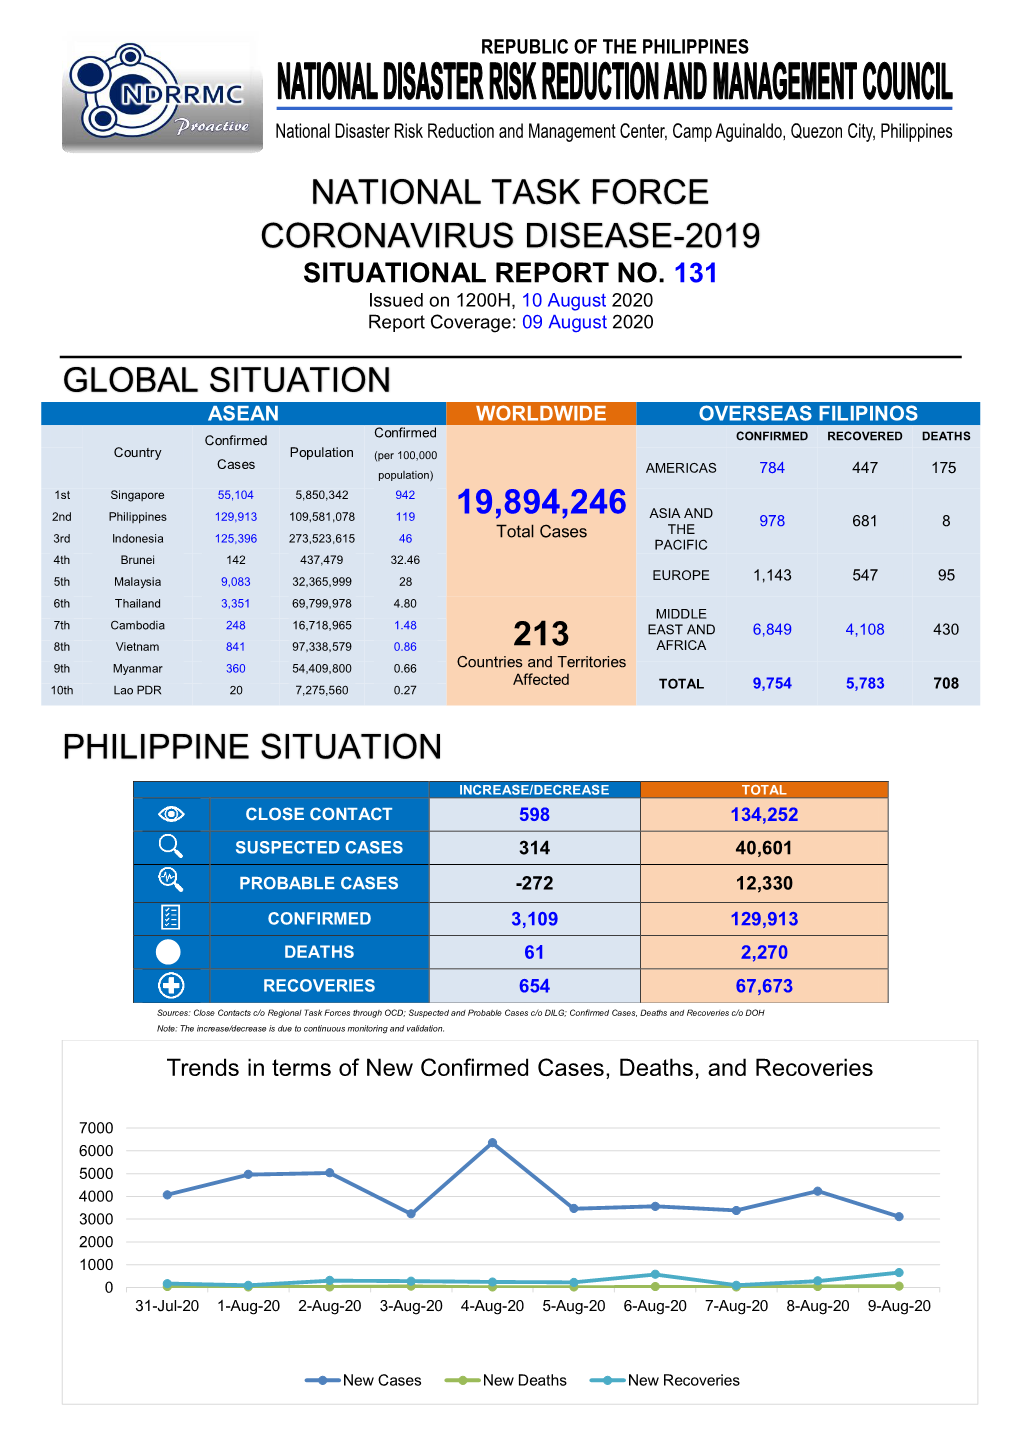 National Task Force Coronavirus Disease-2019 Situational Report No